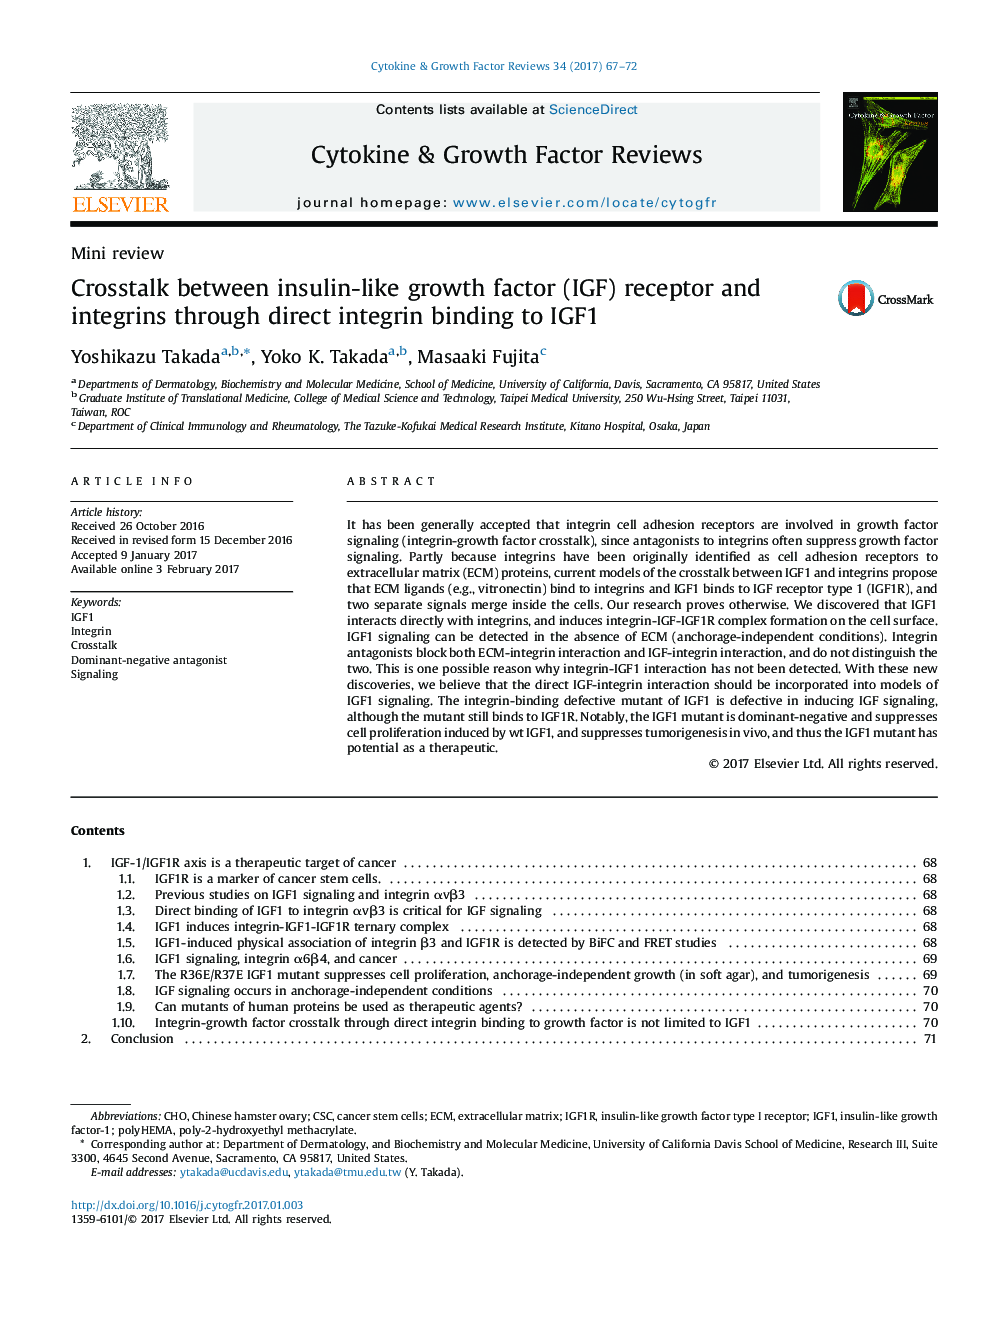 Mini reviewCrosstalk between insulin-like growth factor (IGF) receptor and integrins through direct integrin binding to IGF1